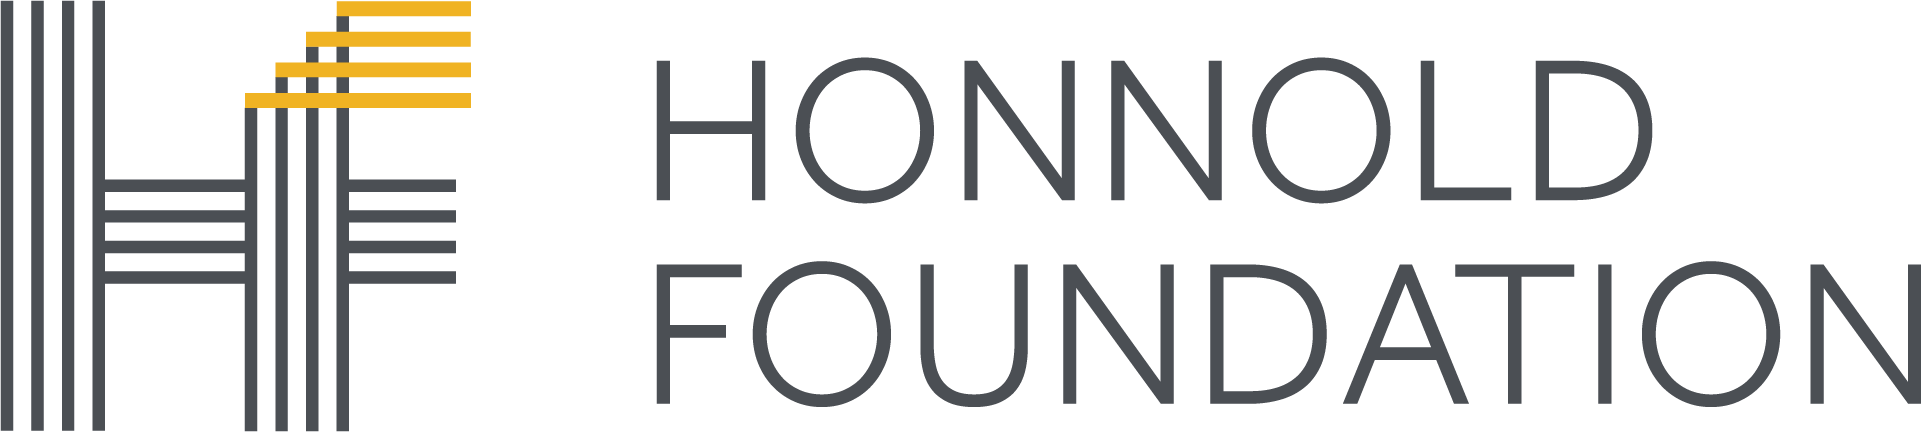 Honnold Foundation Logo